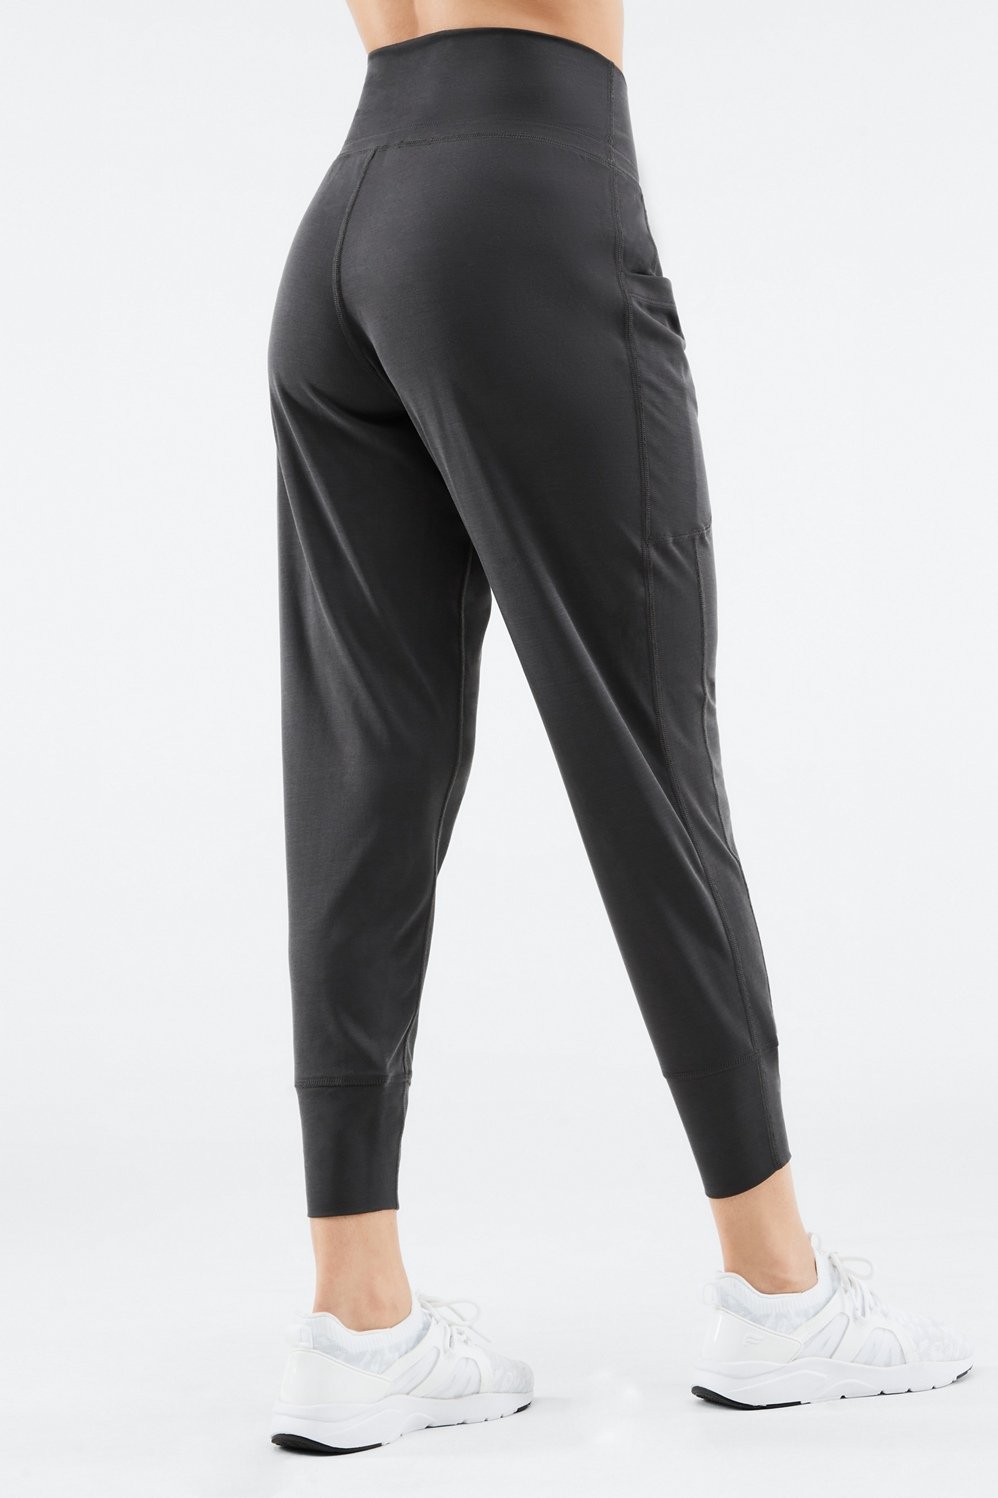 Fabletics Sleek Knit Wide Leg Pant Women's Large Grey Soft Lounge Pant -  $35 - From Megan